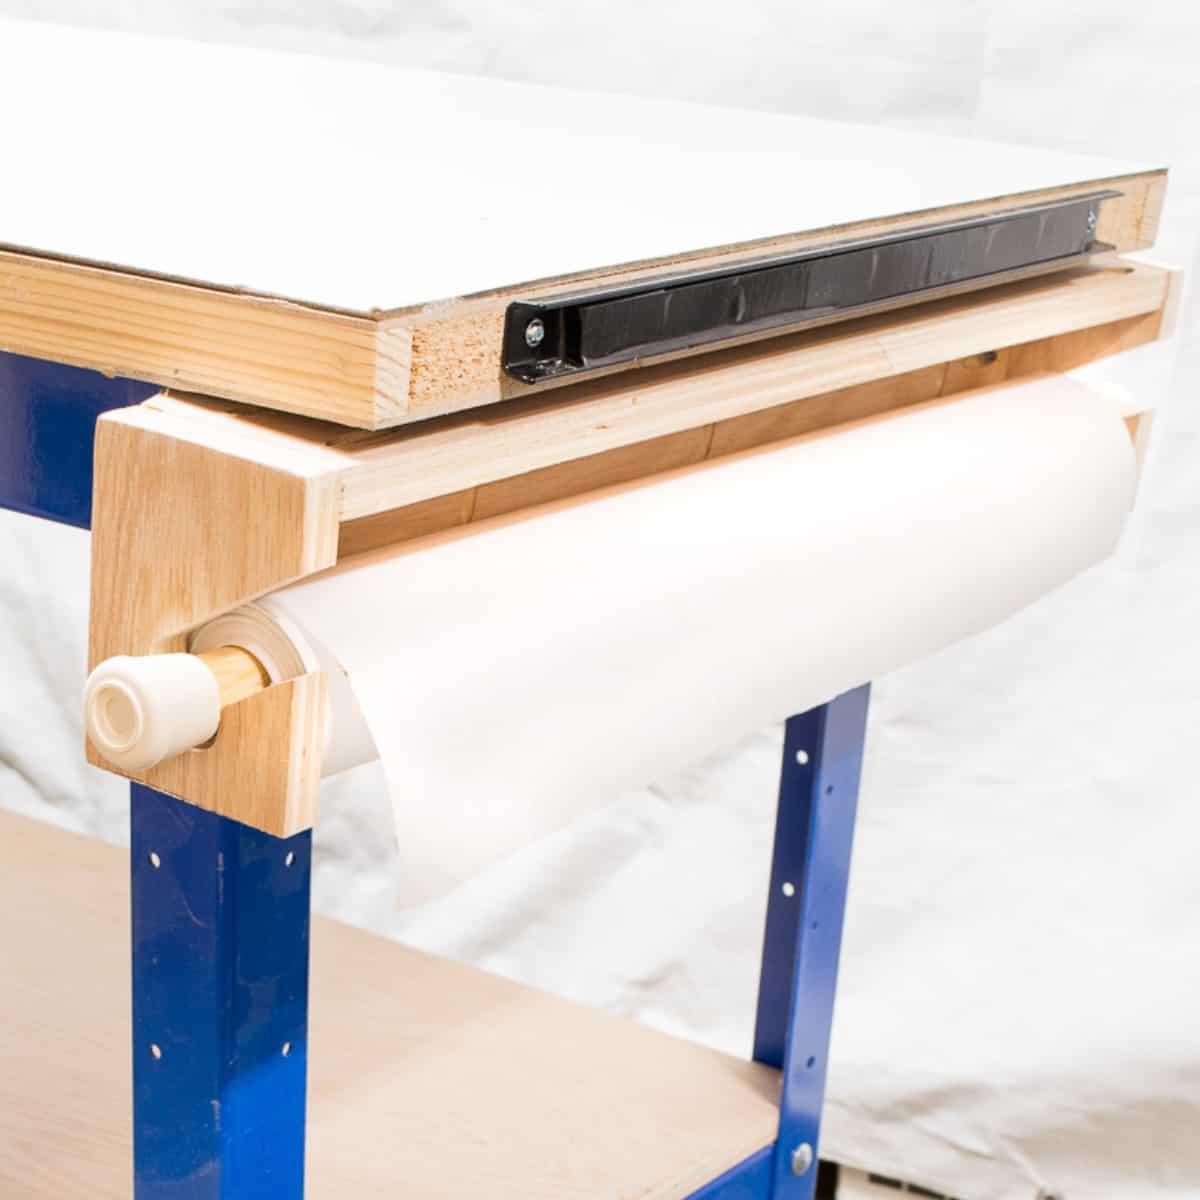 DIY Kraft Paper Roll Holder Tutorial (Cheap & Easy!) - Making